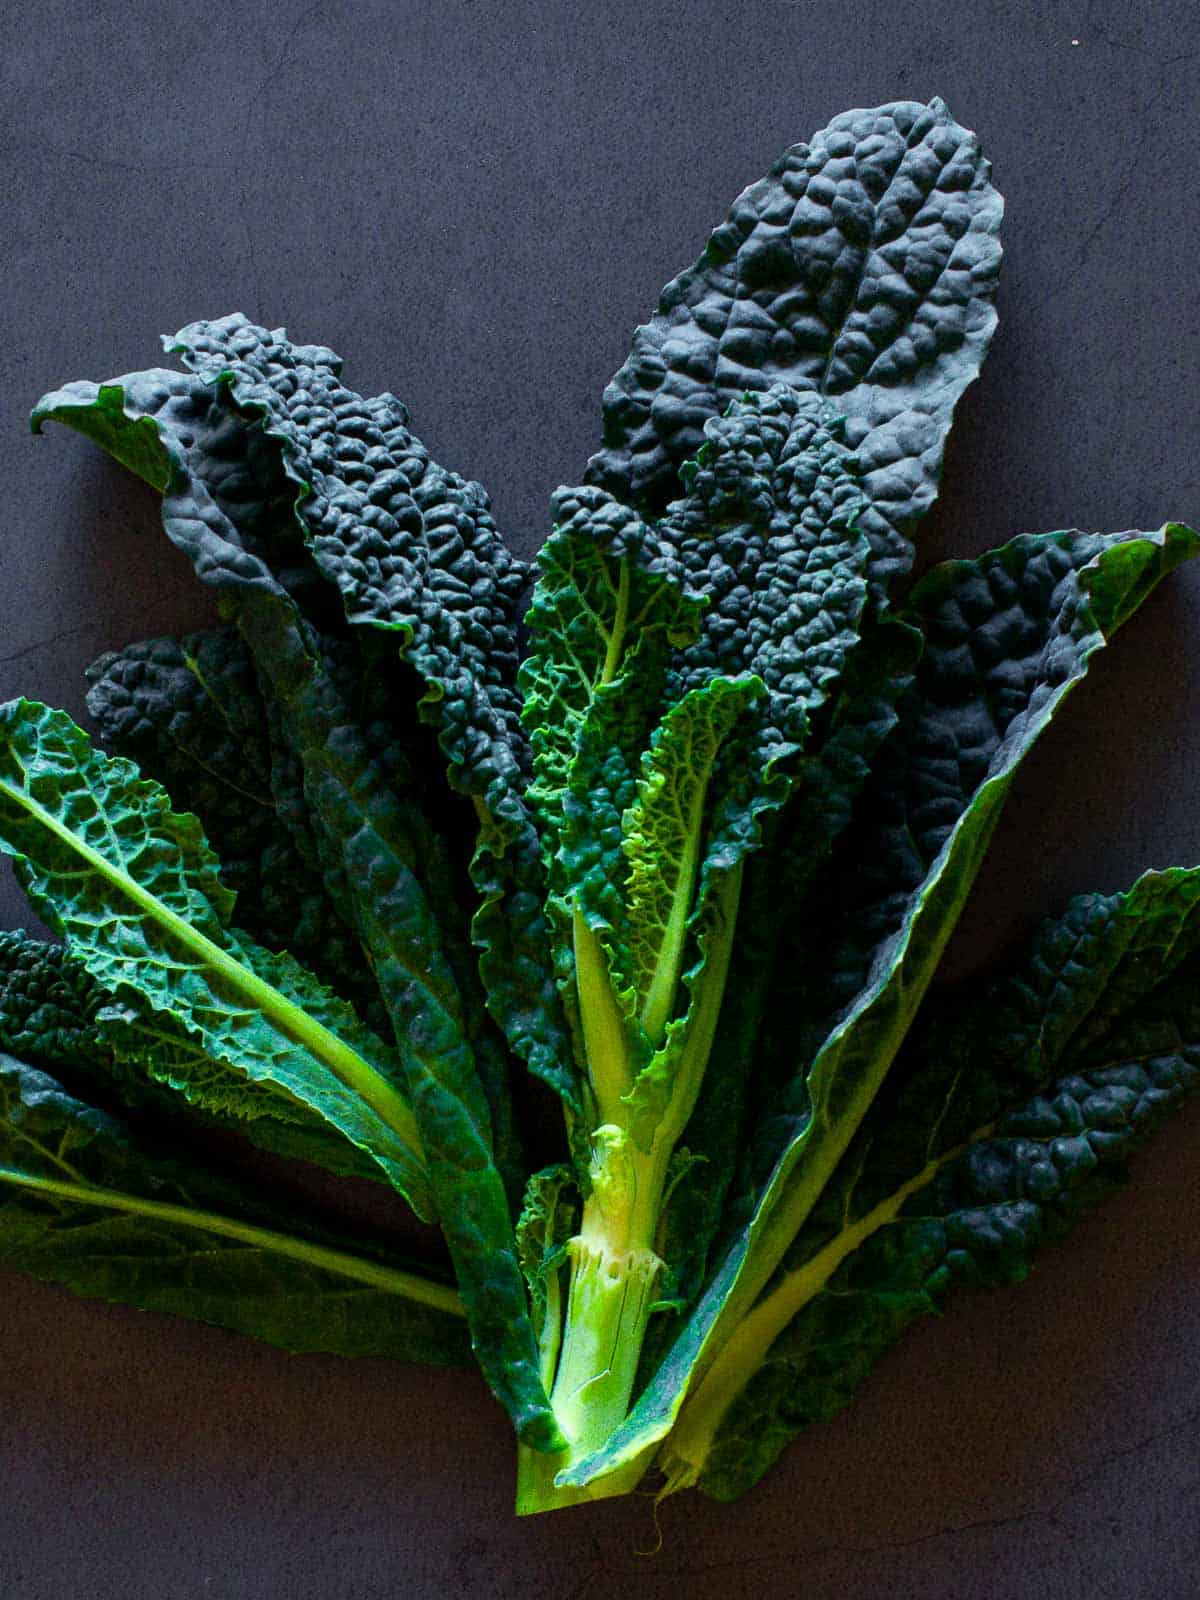 kale leaves. Juicing kale to get the benefits of kale juice